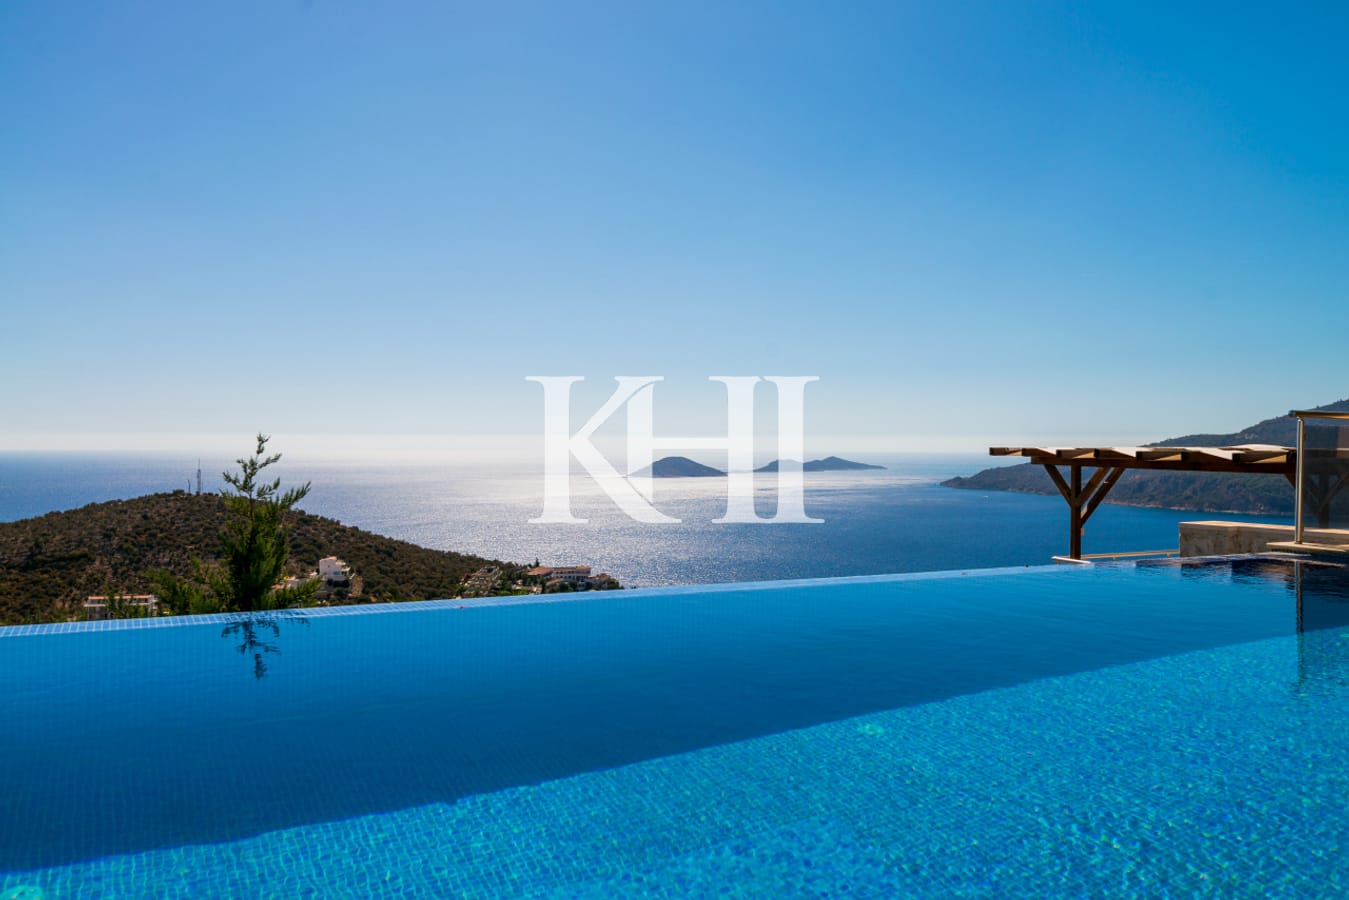 Luxury Villa In Kalamar, Kalkan Slide Image 1